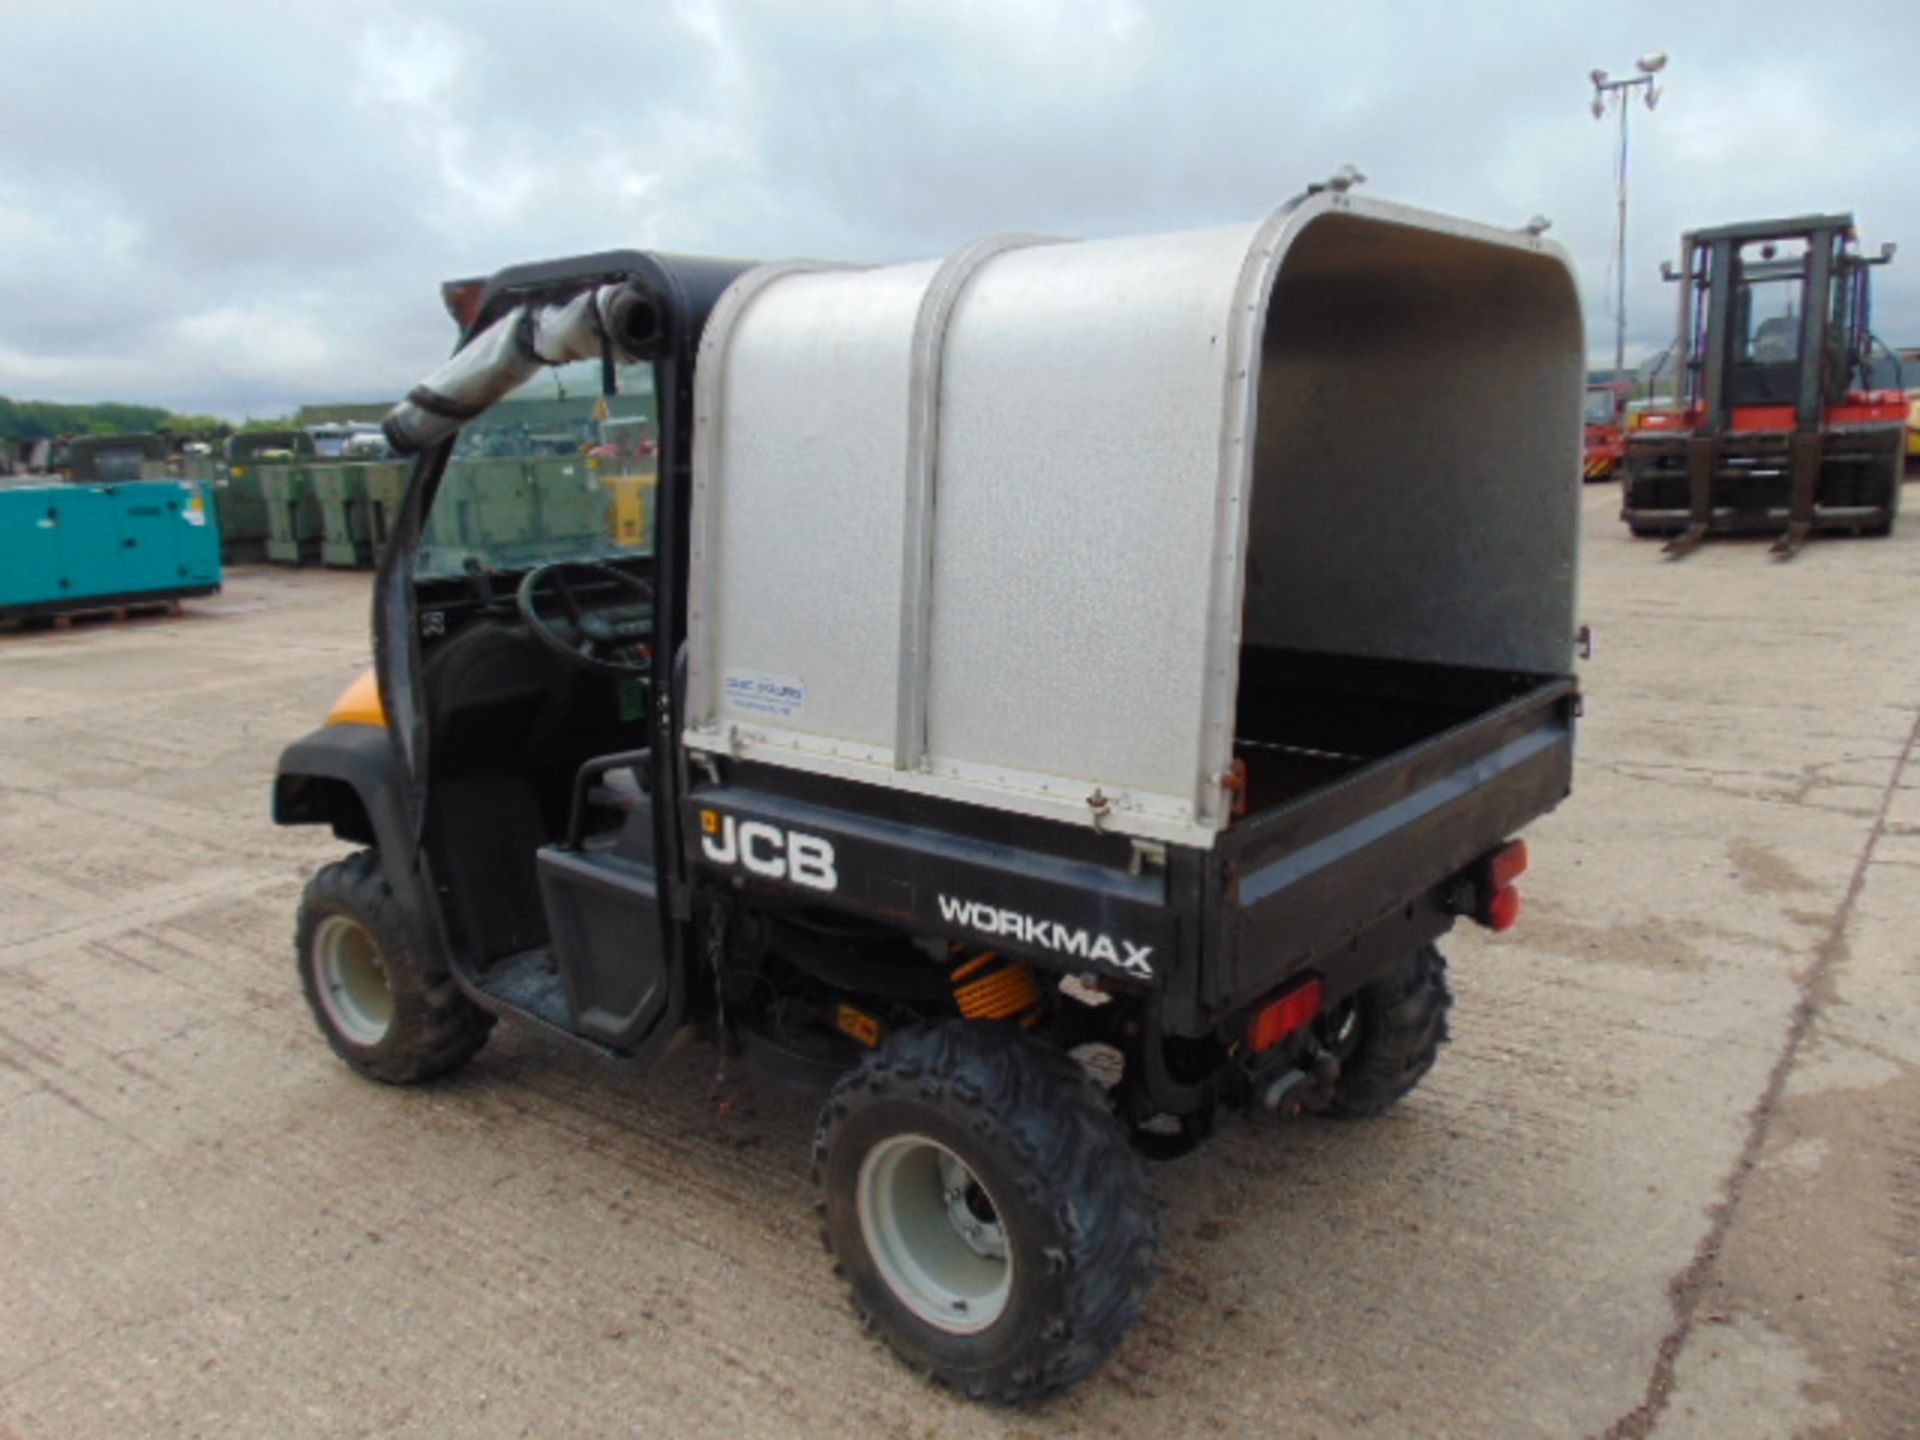 JCB Workmax 1000D 4WD Diesel Utility Vehicle UTV with Aluminium Rear Body - Image 5 of 21